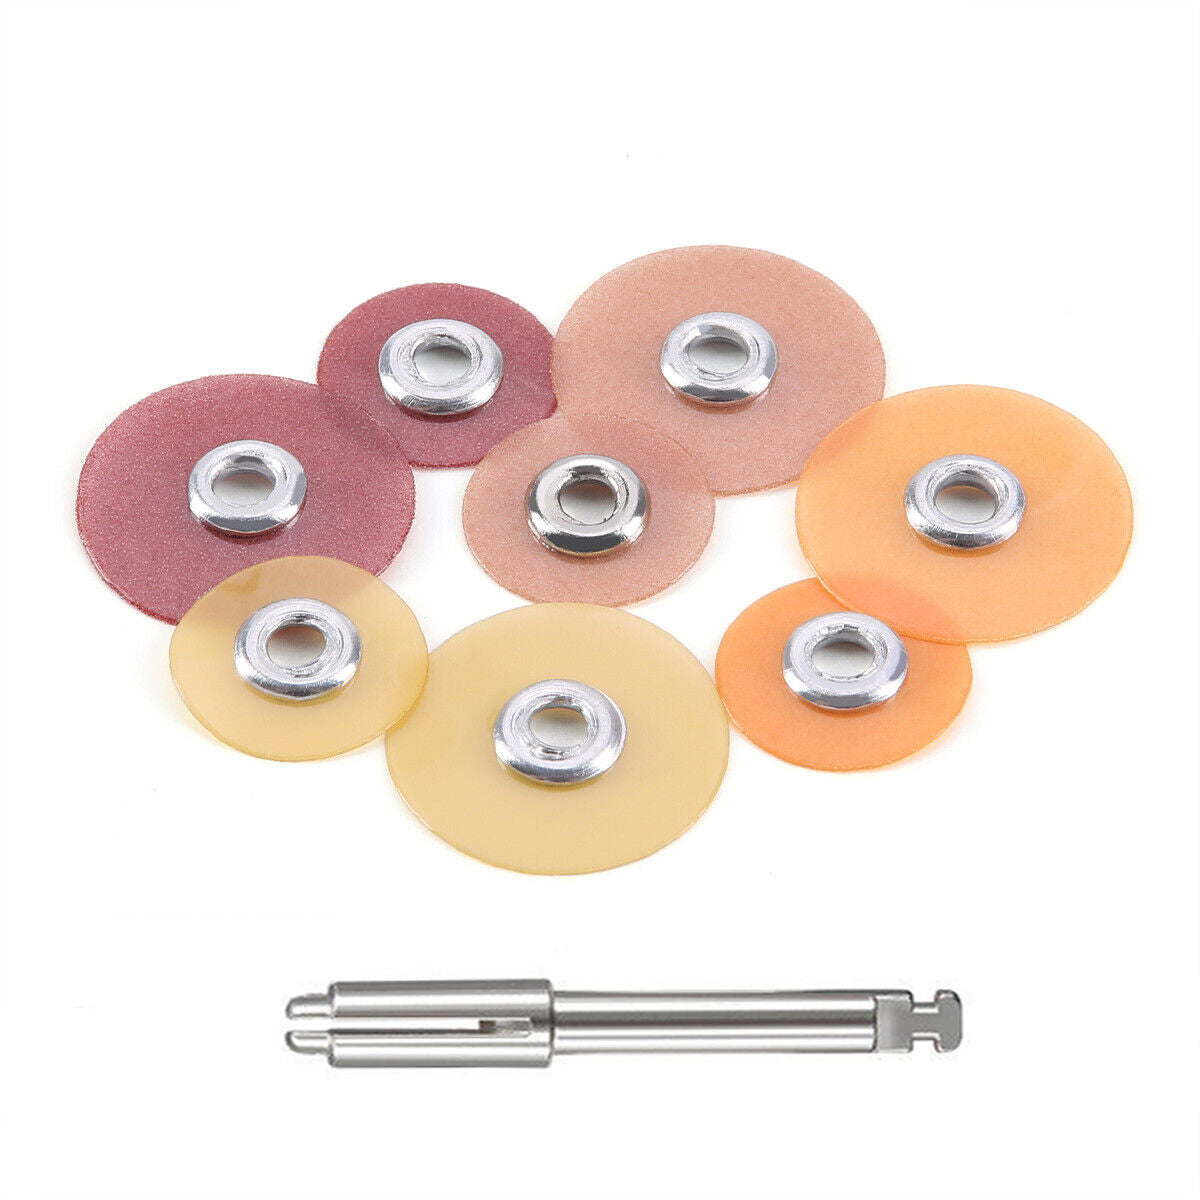 Dental Finishing & Polishing Discs 1/2" or 3/8" Coarse/Medium/Fine/Superfine with Free Mandrel - pairaydental.com